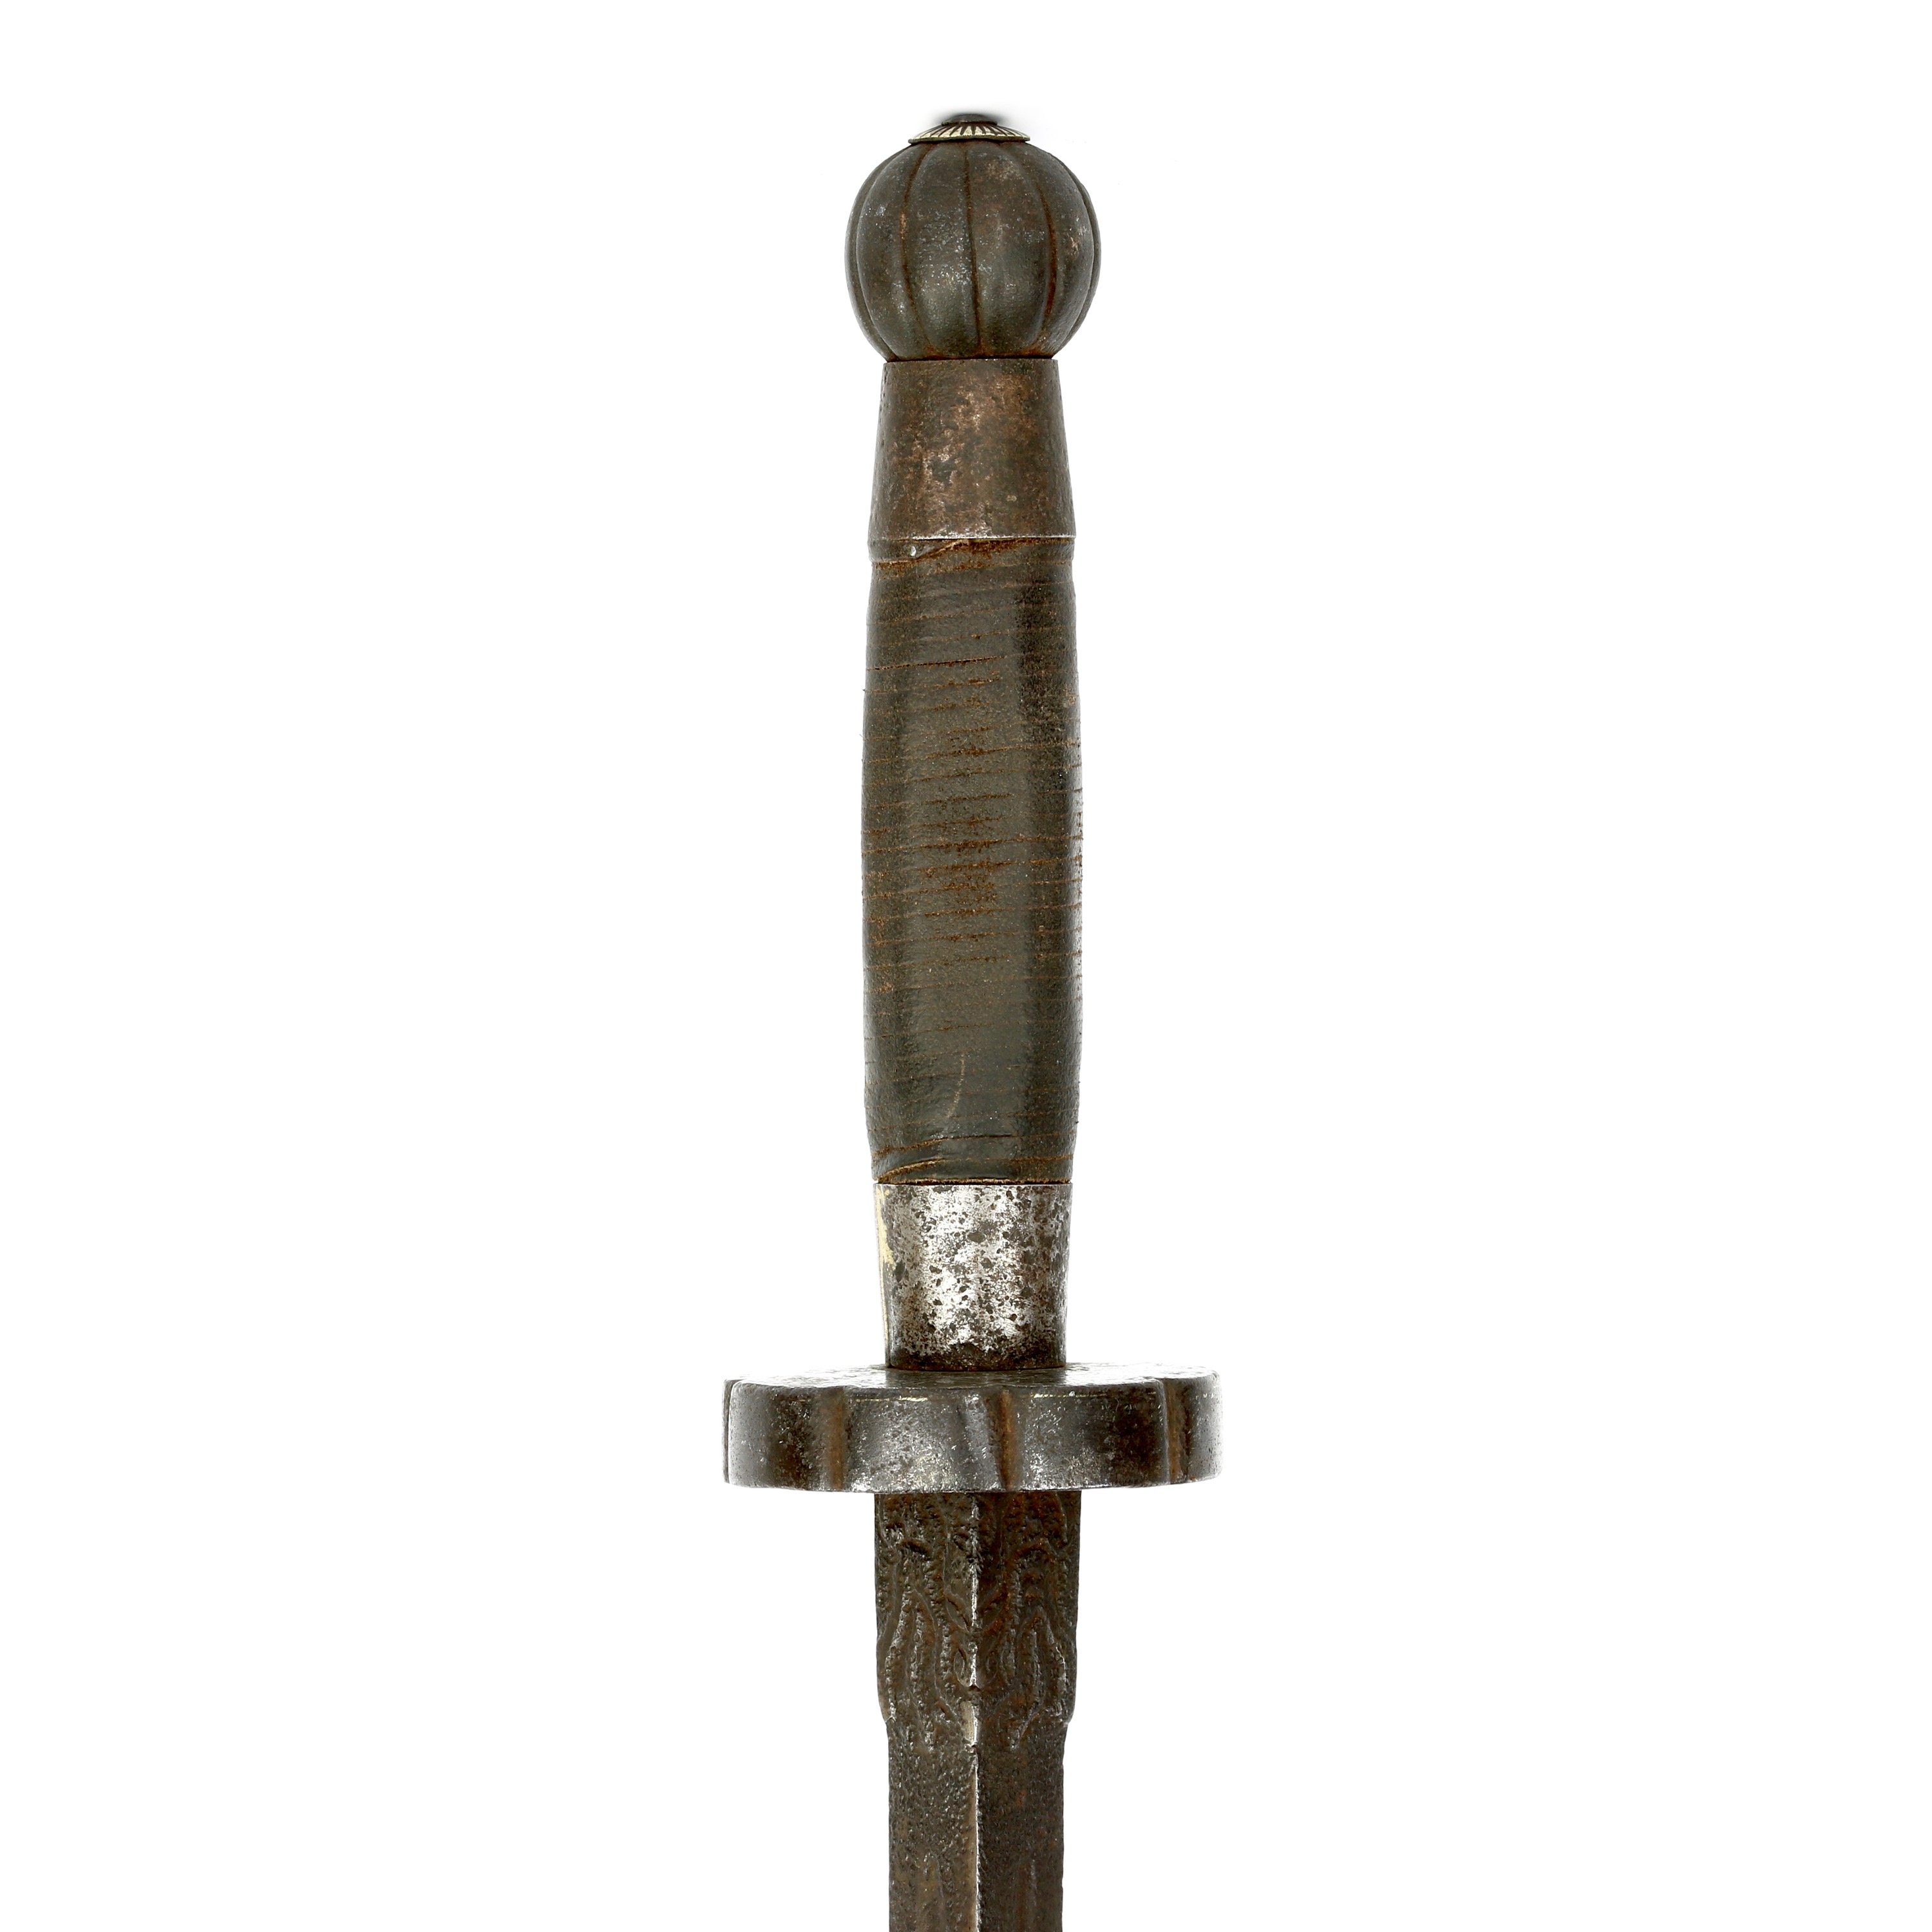 A Chinese sword breaker (jian) logo